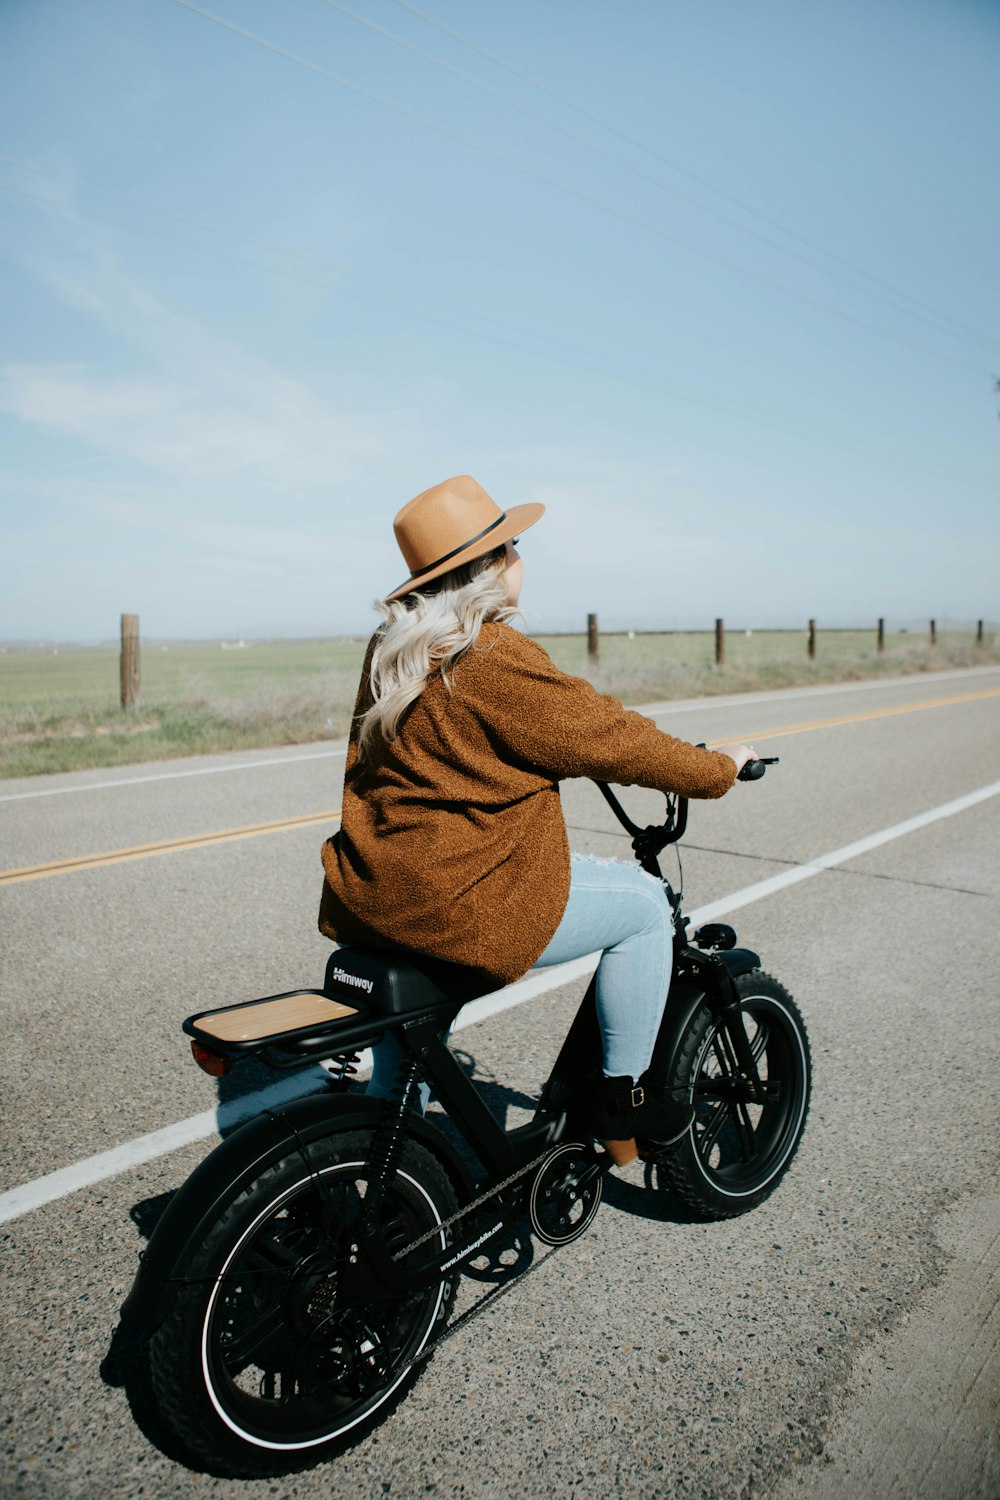 man in brown jacket riding motorcycle on road during daytime